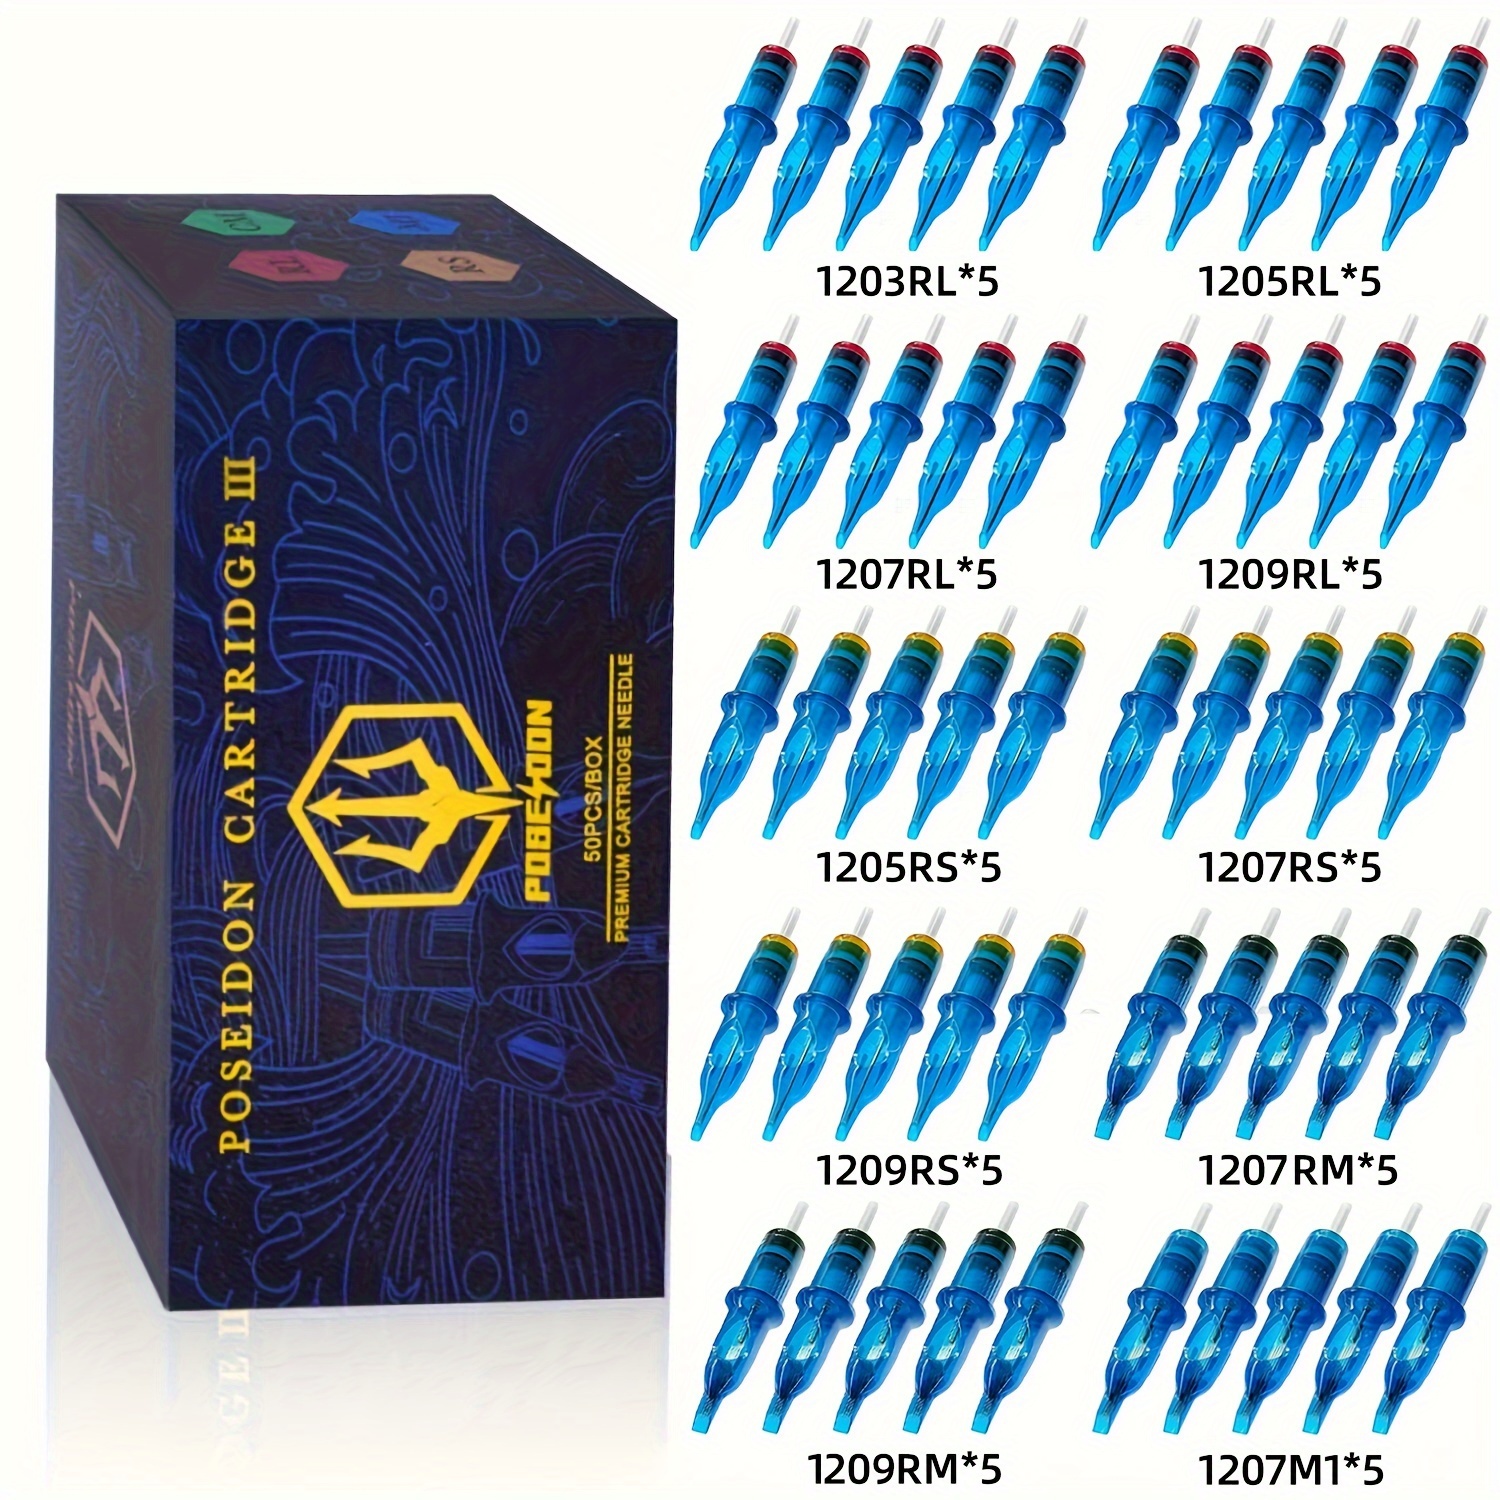 

Poseidon V3 Tattoo Cartridge Needles 50pcs Mixed Size Steriled Needles With Membrane Safety Cartridges-1203rl, 1205rl, 1207rl, 1209rl, 1207rm, 1209rm, 1205rs, 1207rs, 1209rs, 1207m1